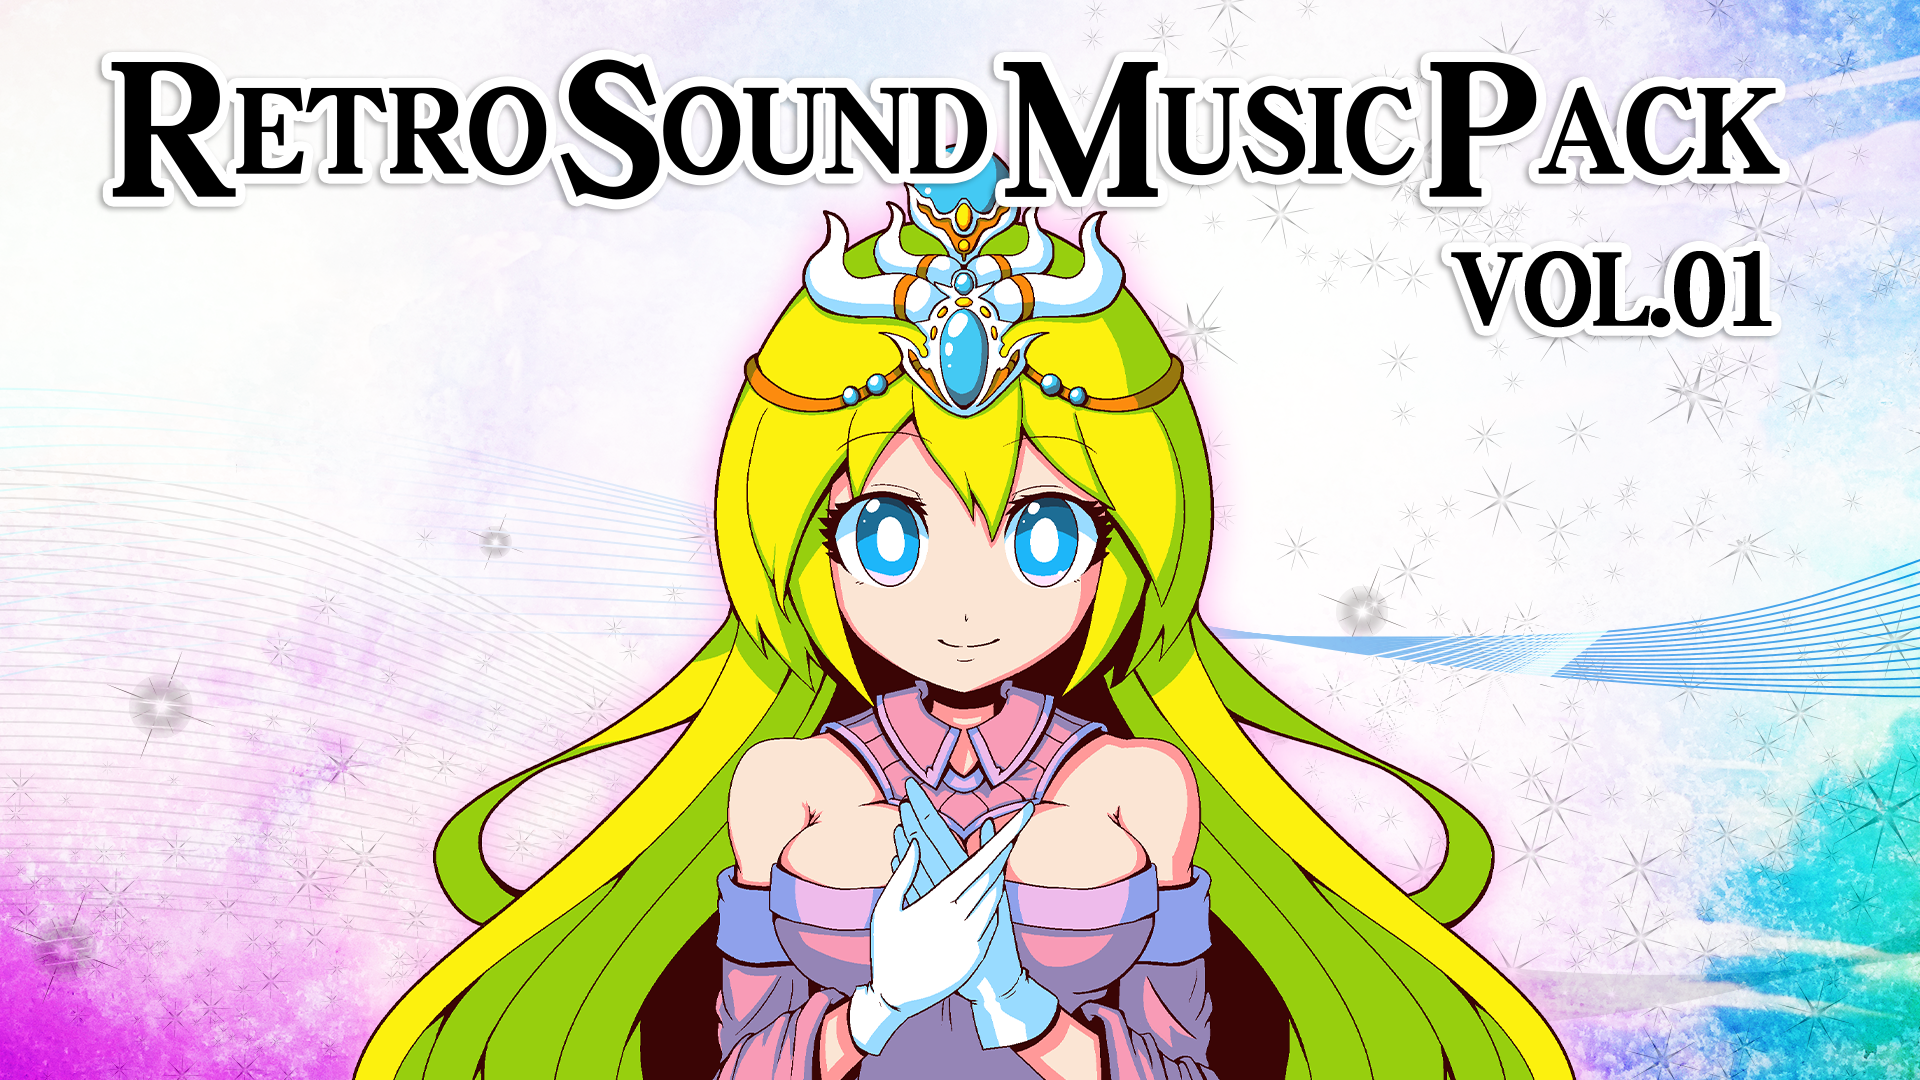 RPGツクール公式素材「Retro Sound Music Pack Vol.01」音楽フリー素材のサムネイル画像